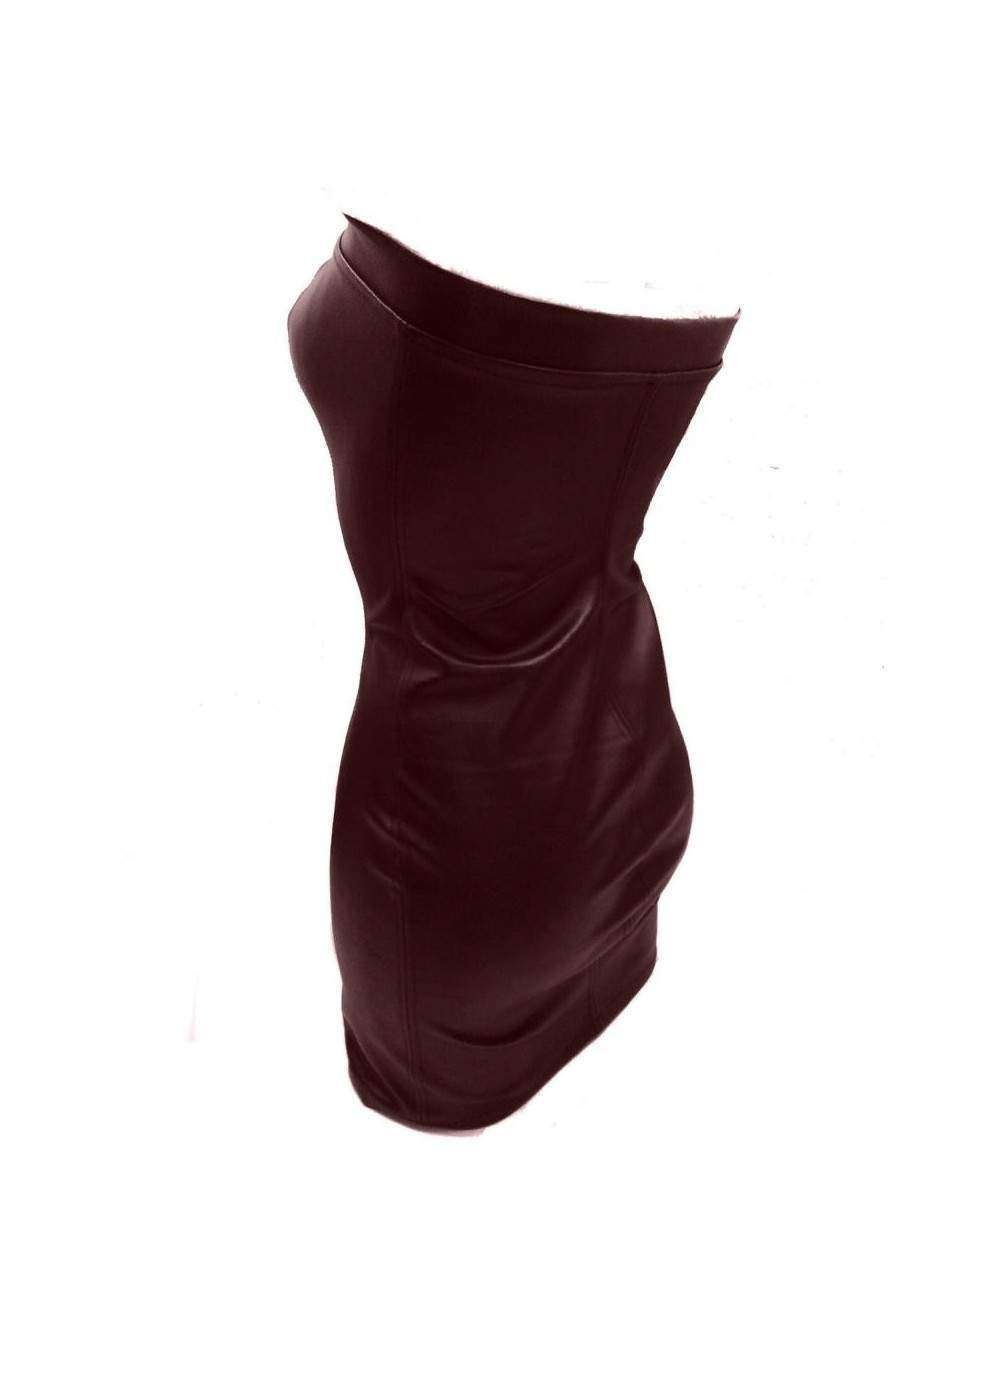 Sehr softes Leder Kleid braun Größen 34 - 52 ab 29,00 € - 